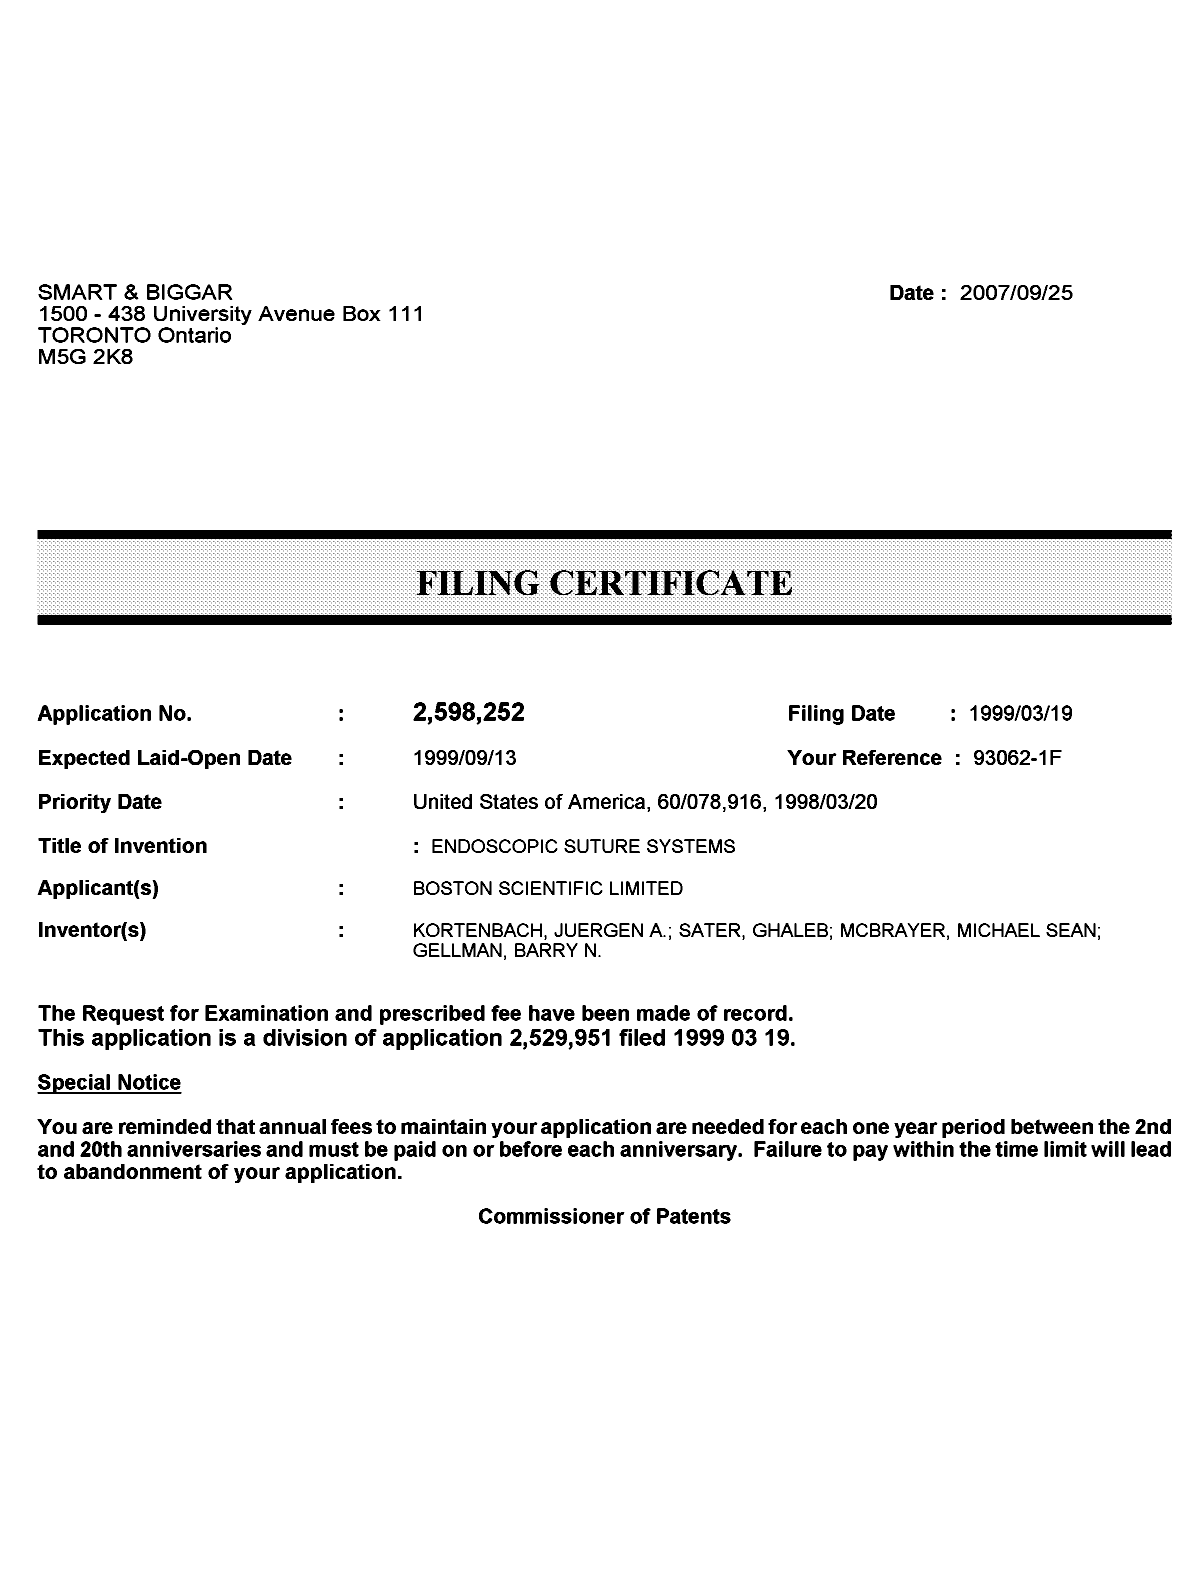 Canadian Patent Document 2598252. Correspondence 20070925. Image 1 of 1